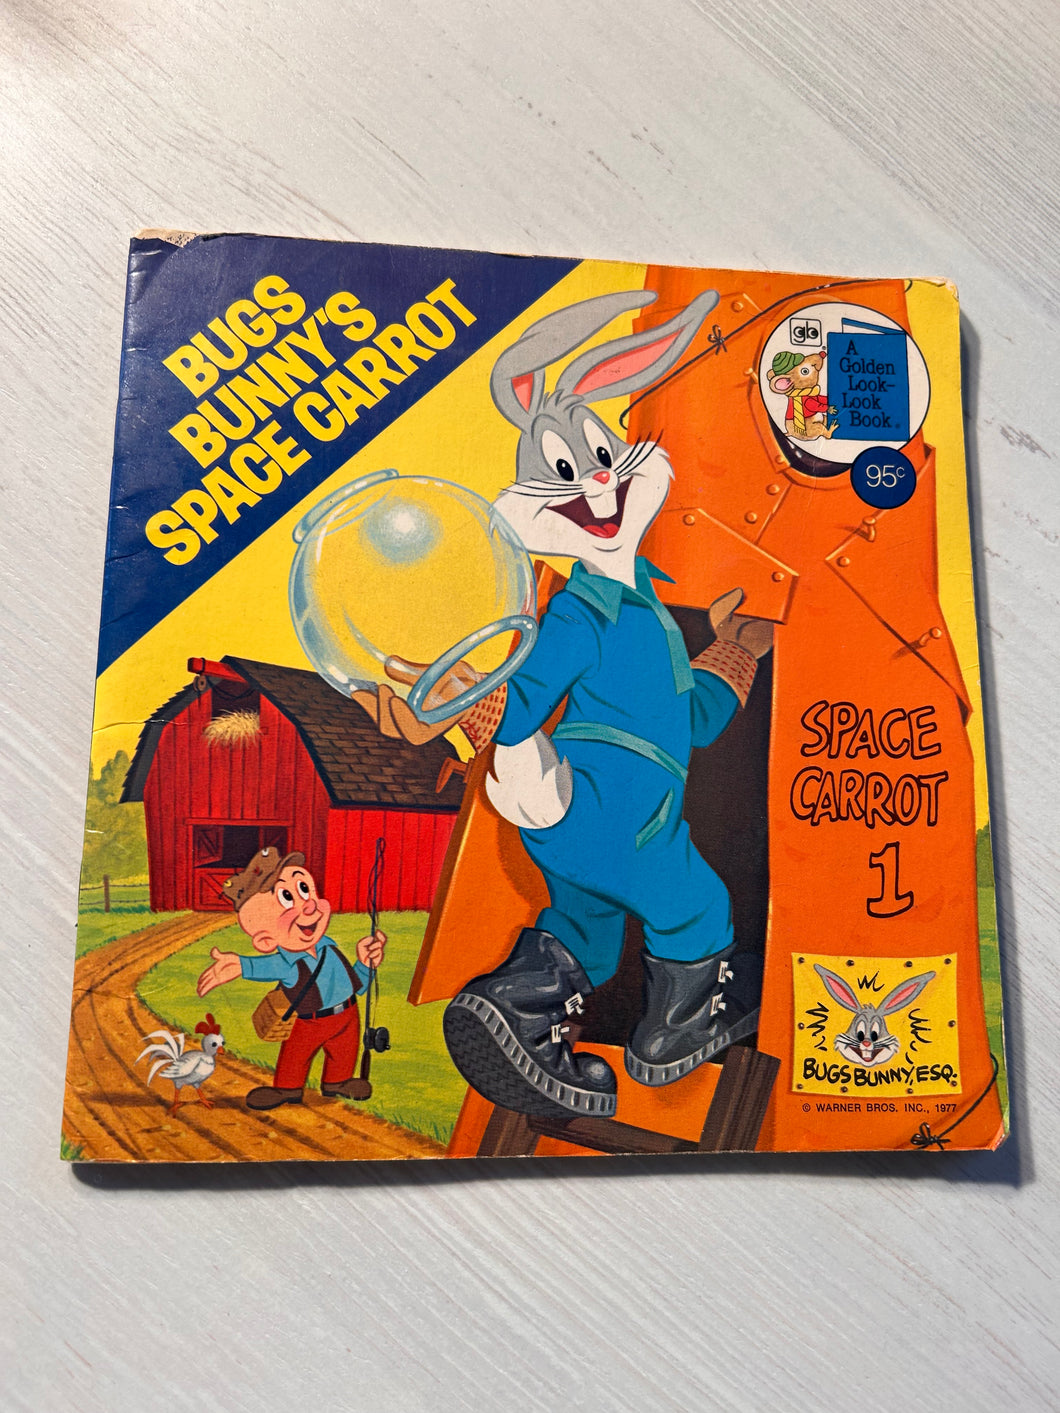 Bugs bunny book